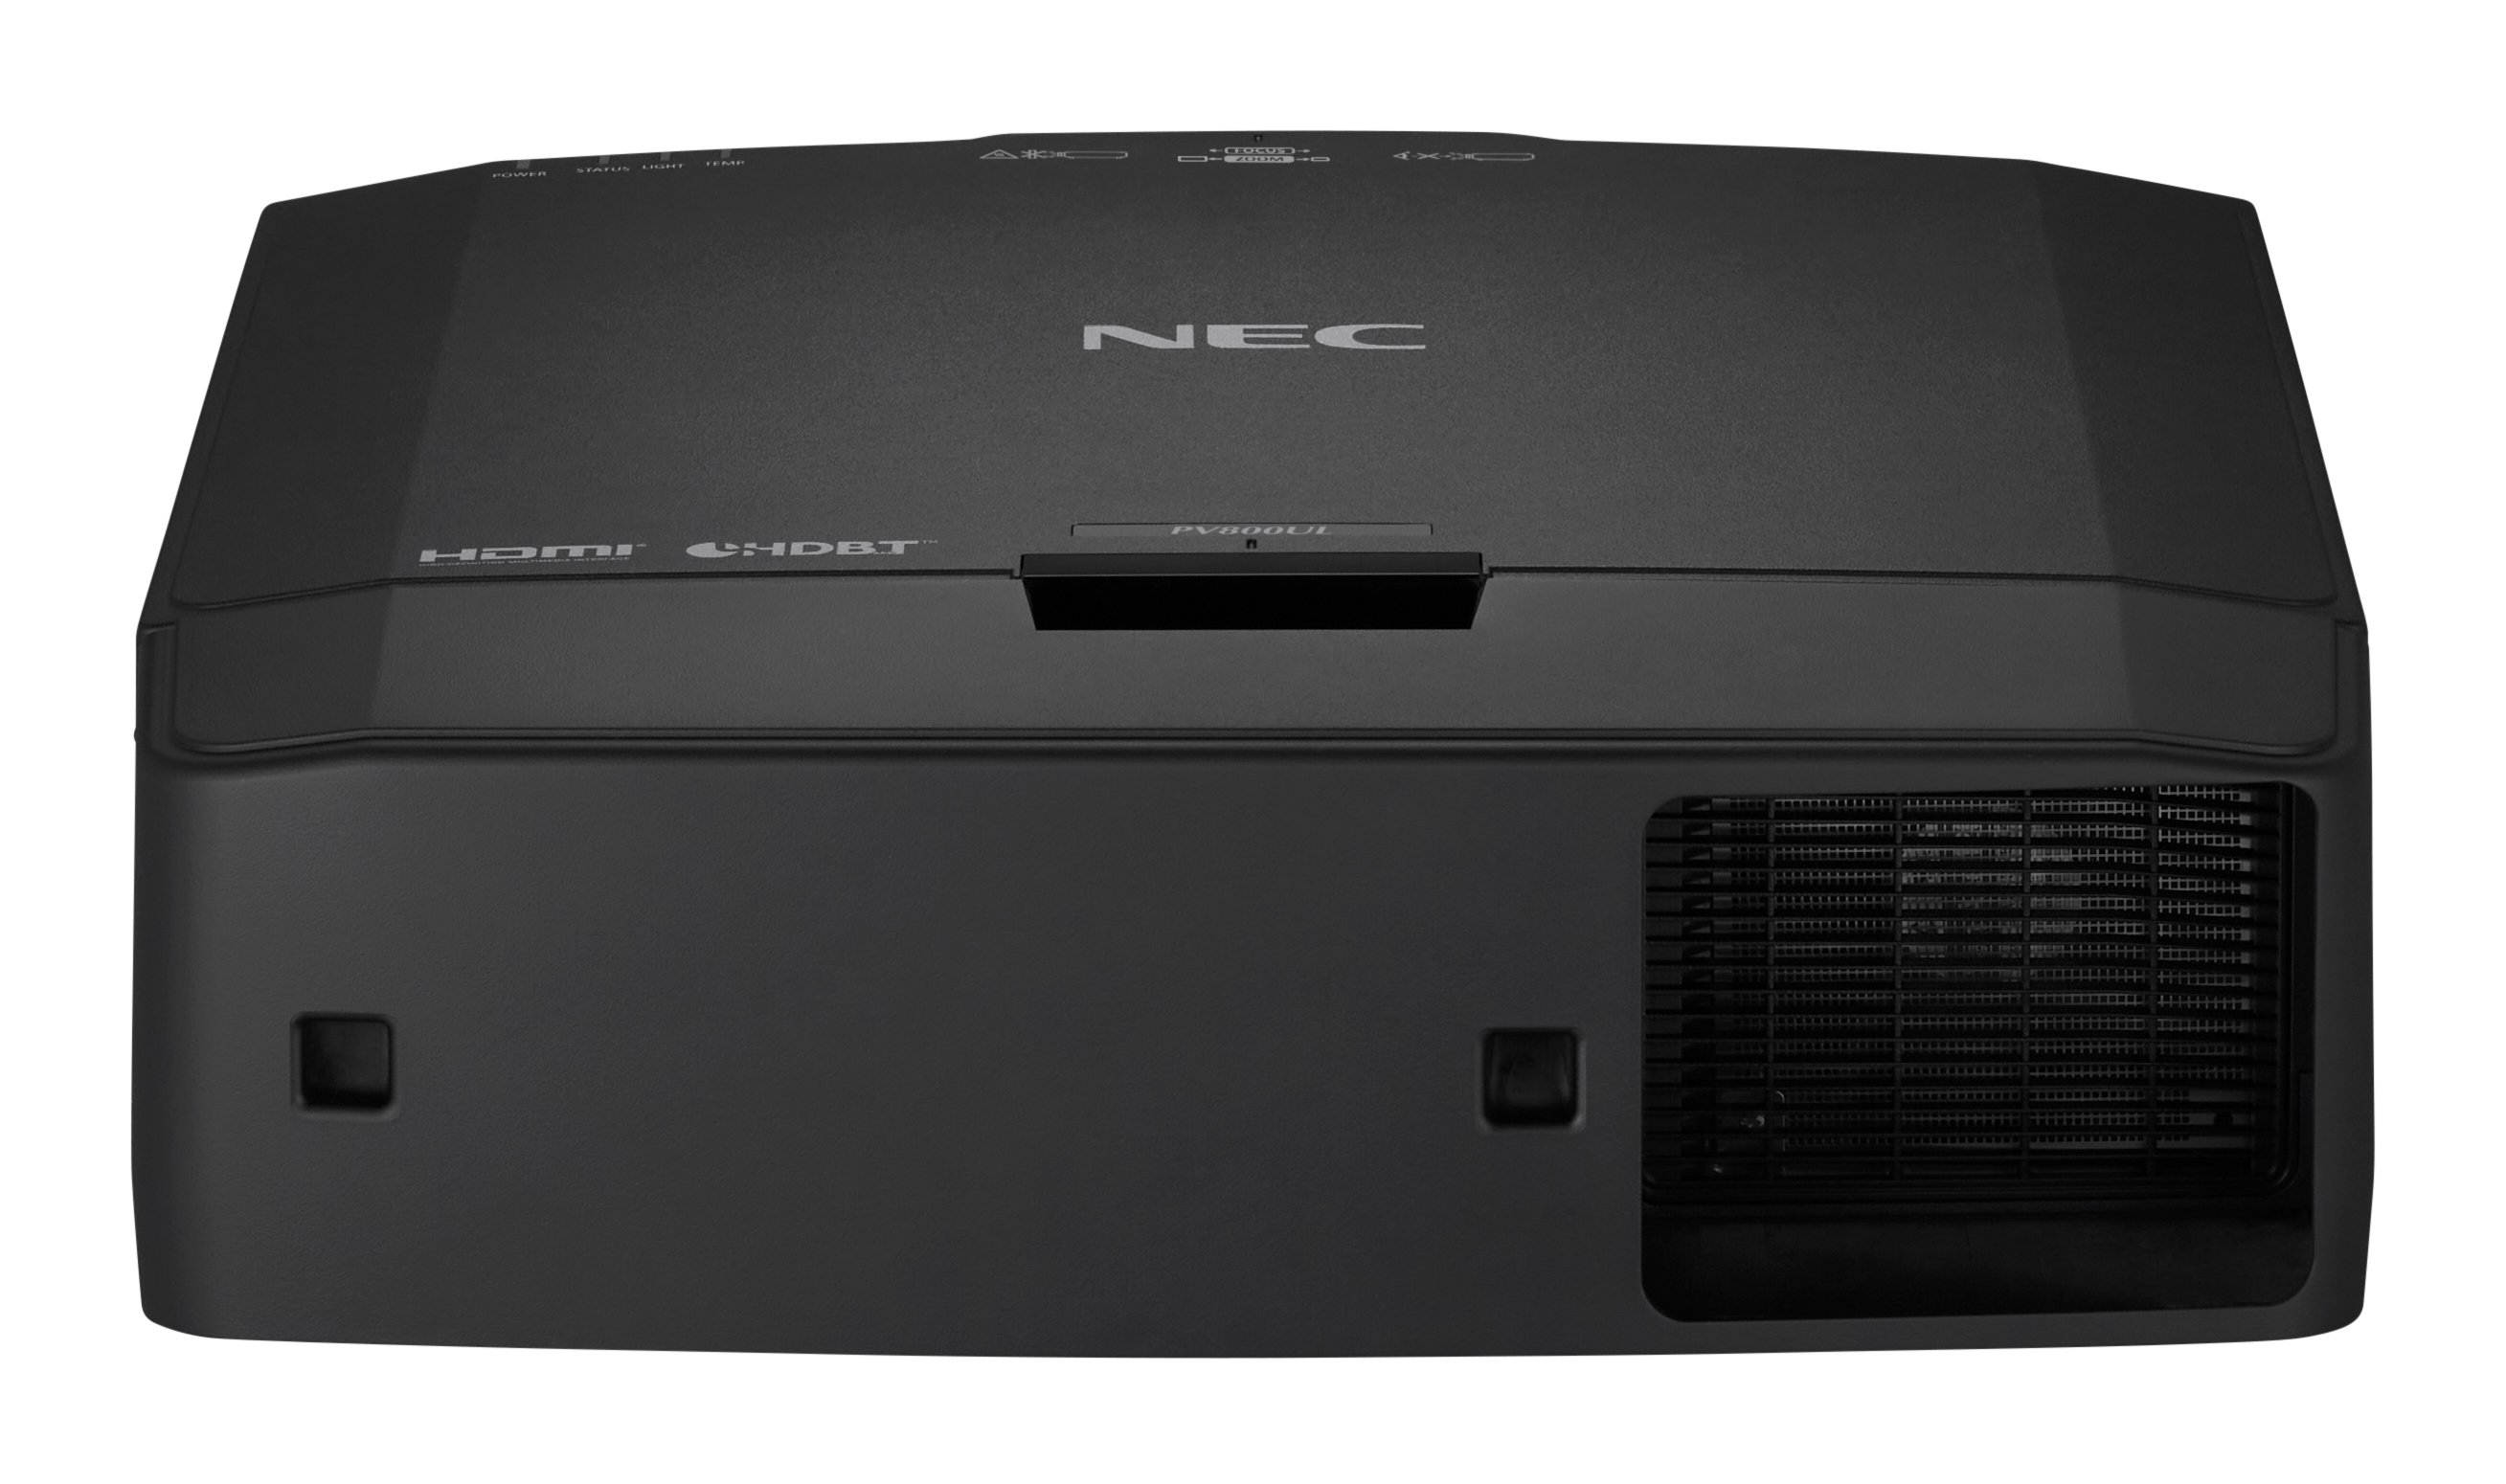 NEC Projektor PV800UL-B